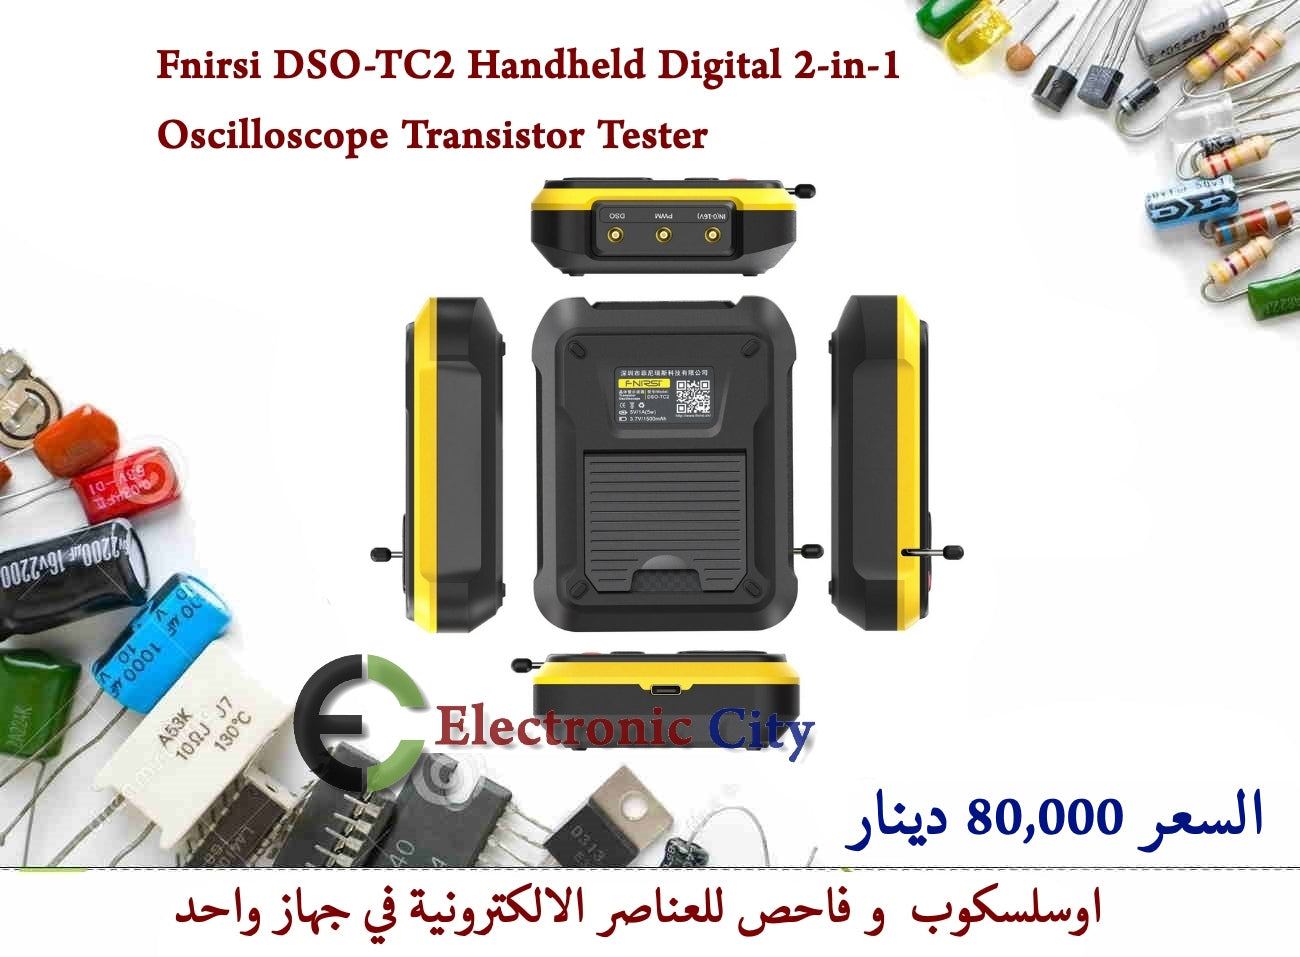 Fnirsi DSO-TC2 Handheld Digital 2-in-1 Oscilloscope Transistor Tester #15